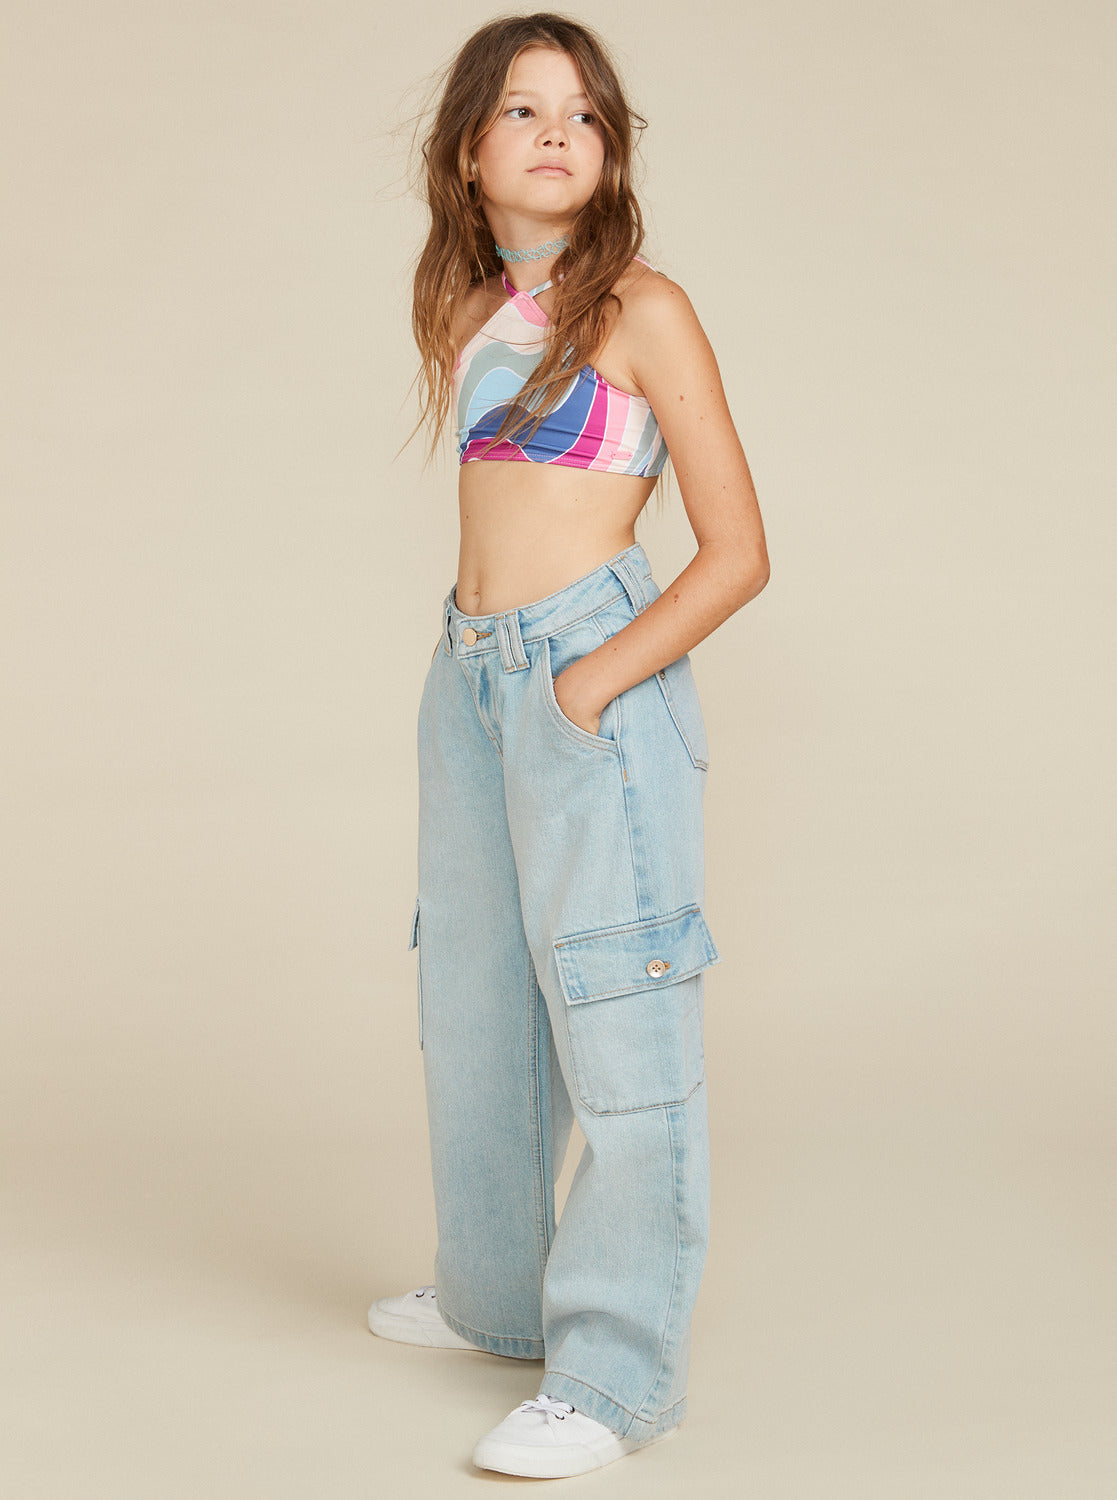 Amazon.com: JELEUON Big Girls Kids Child Fashion Ripped Distressed Holes  Fashion Casual Sport Jean Street Denim Pants4-5 Years: Clothing, Shoes &  Jewelry